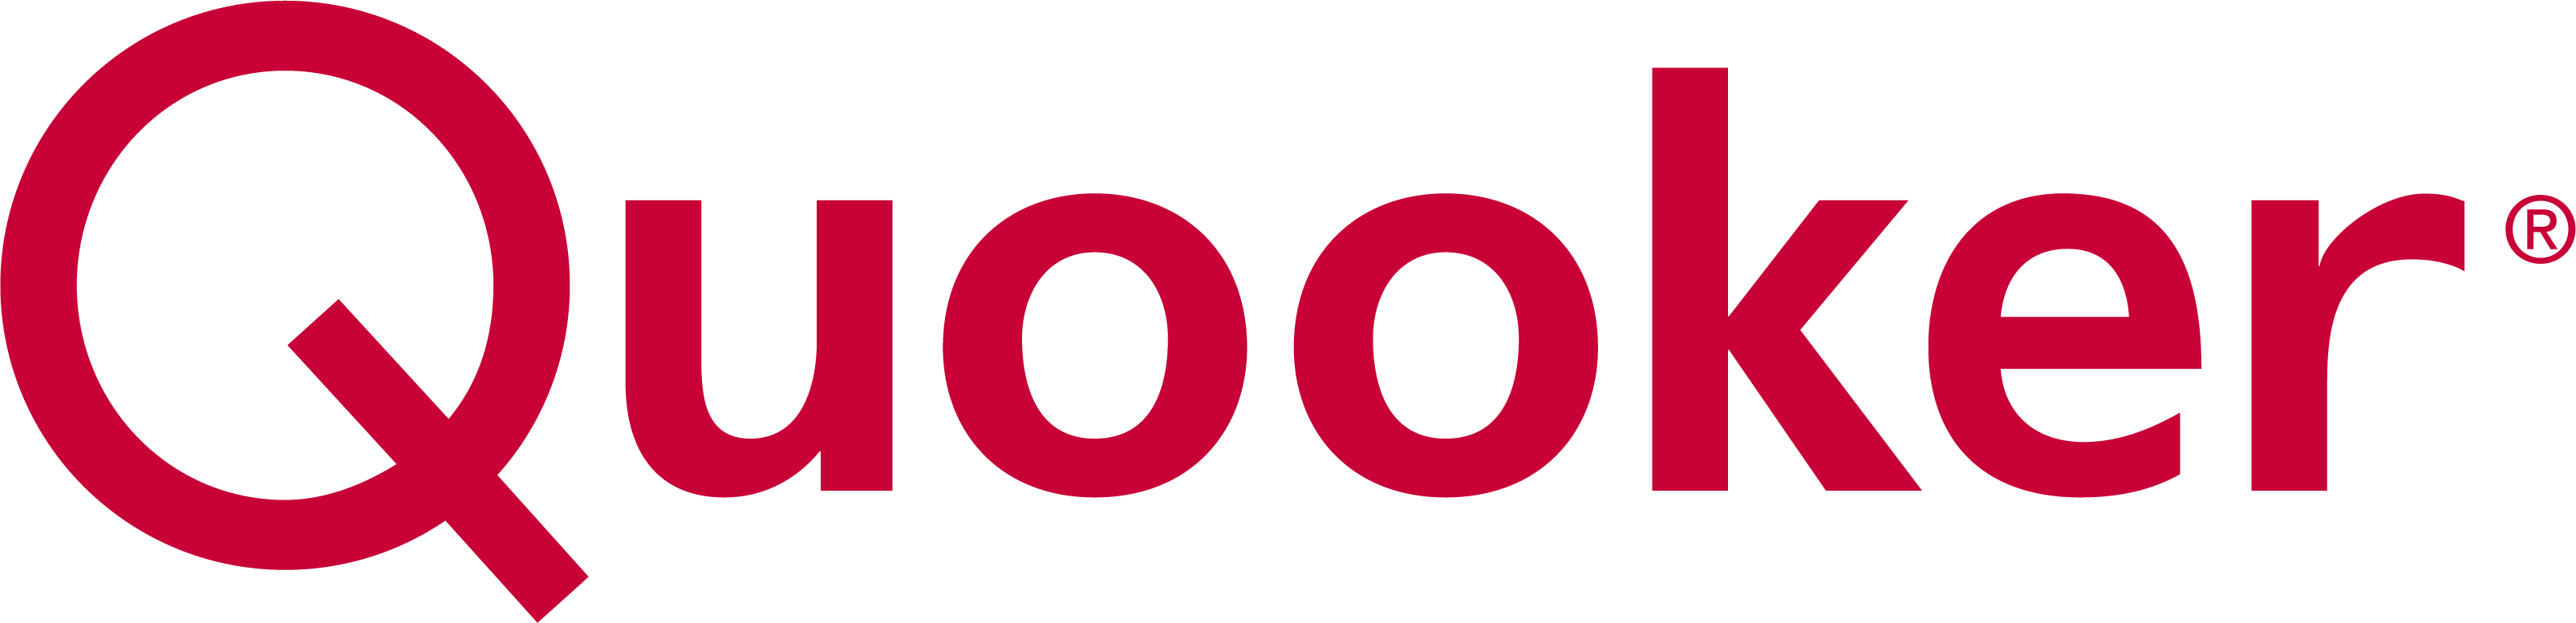 Quooker logo RGB 200254